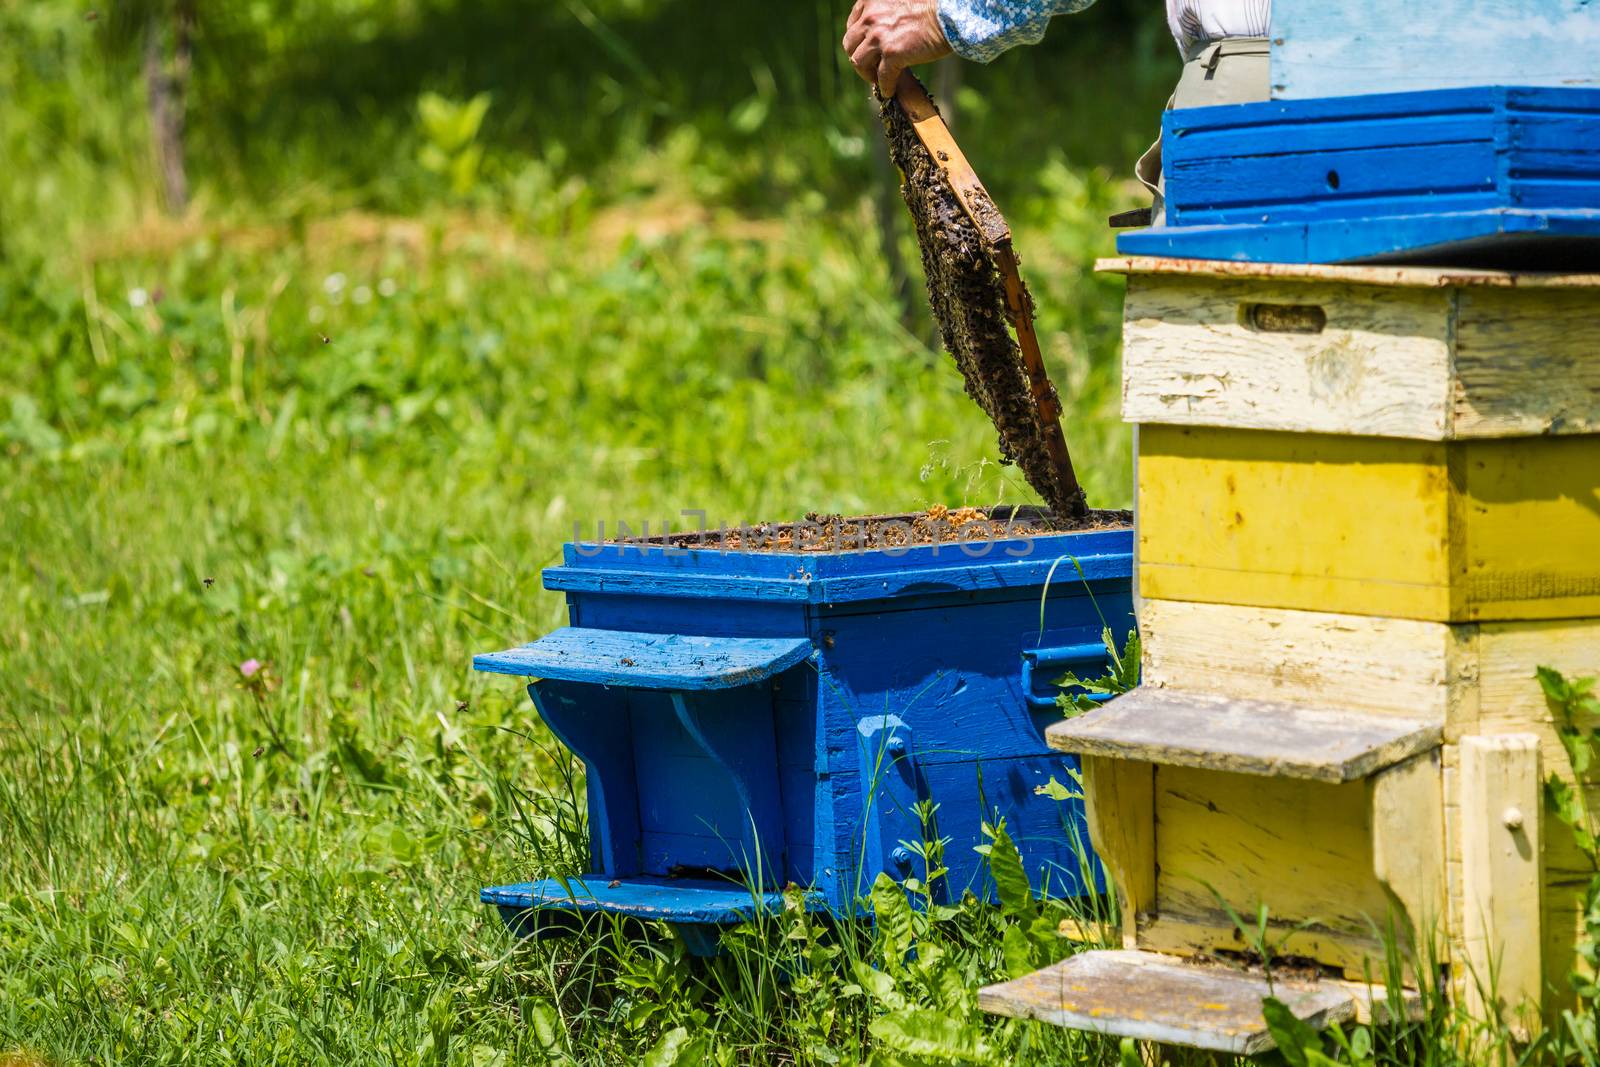 Beekeeping - Beekeeper checking hive